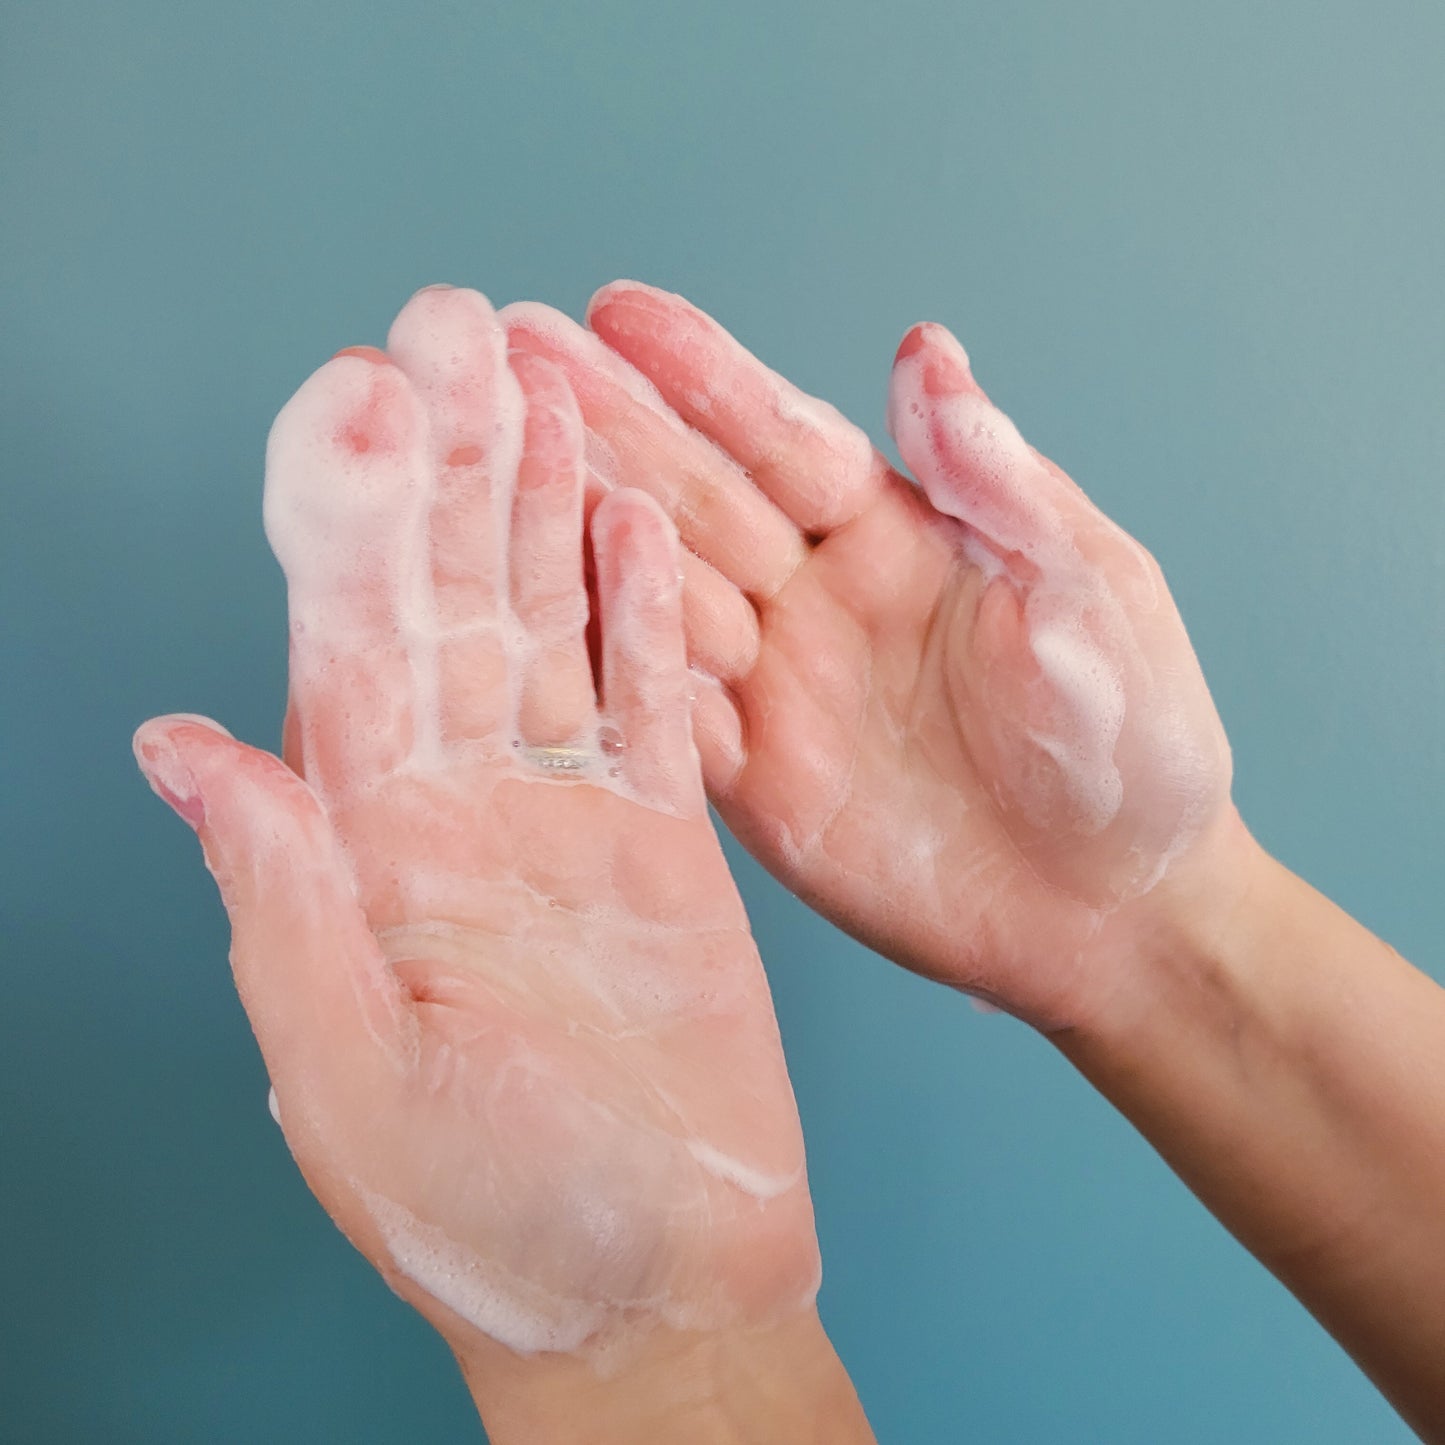 Lavender Foaming Hand Soap